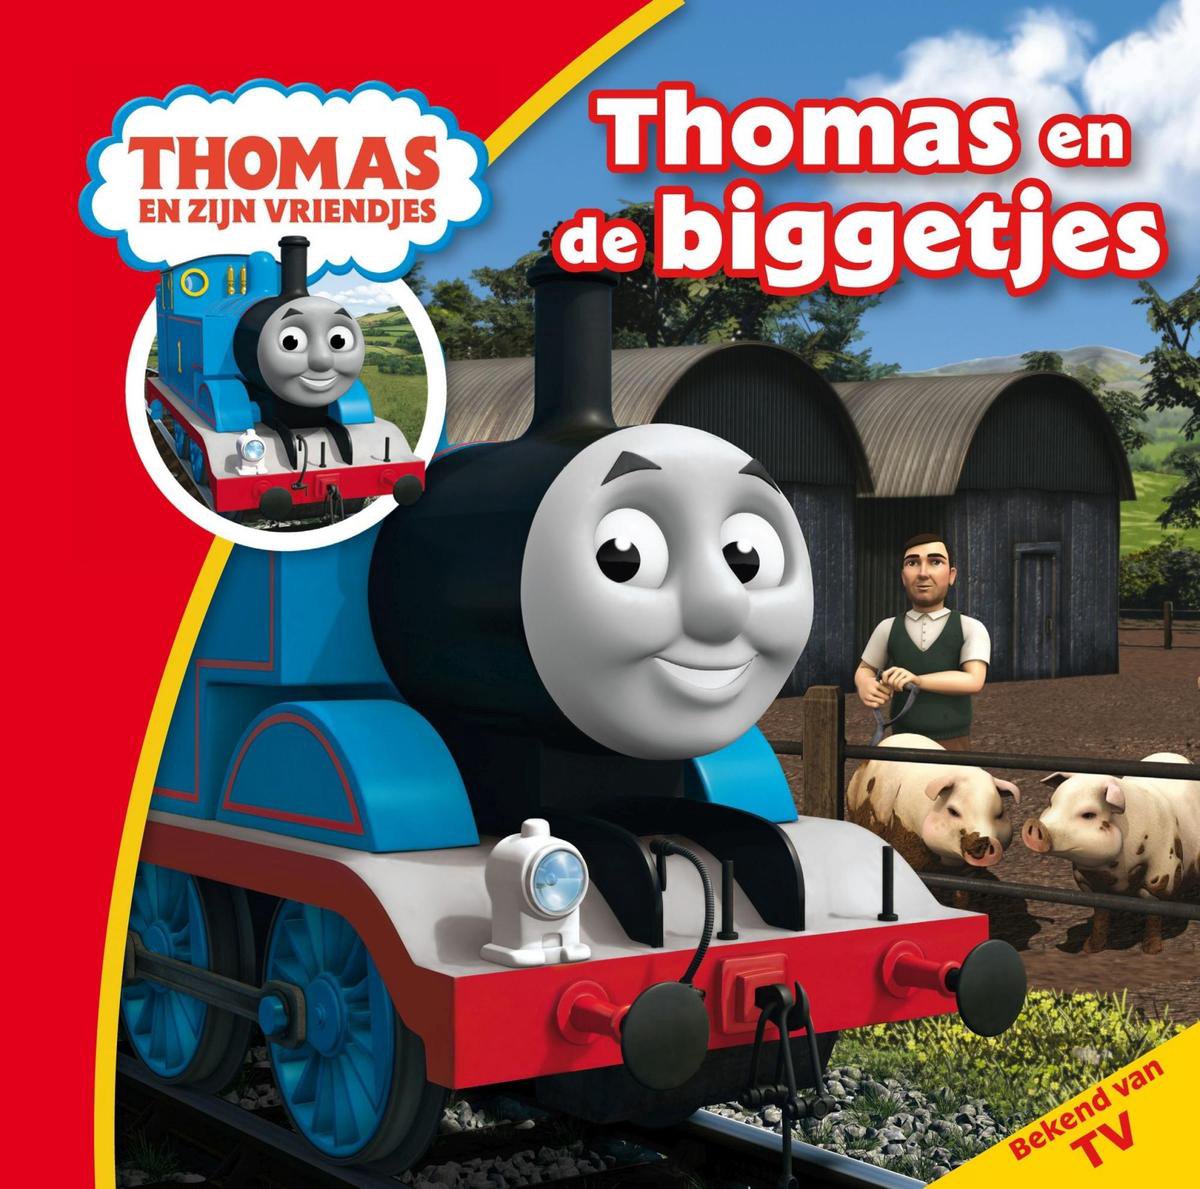 Thomas en de biggetjes / Thomas